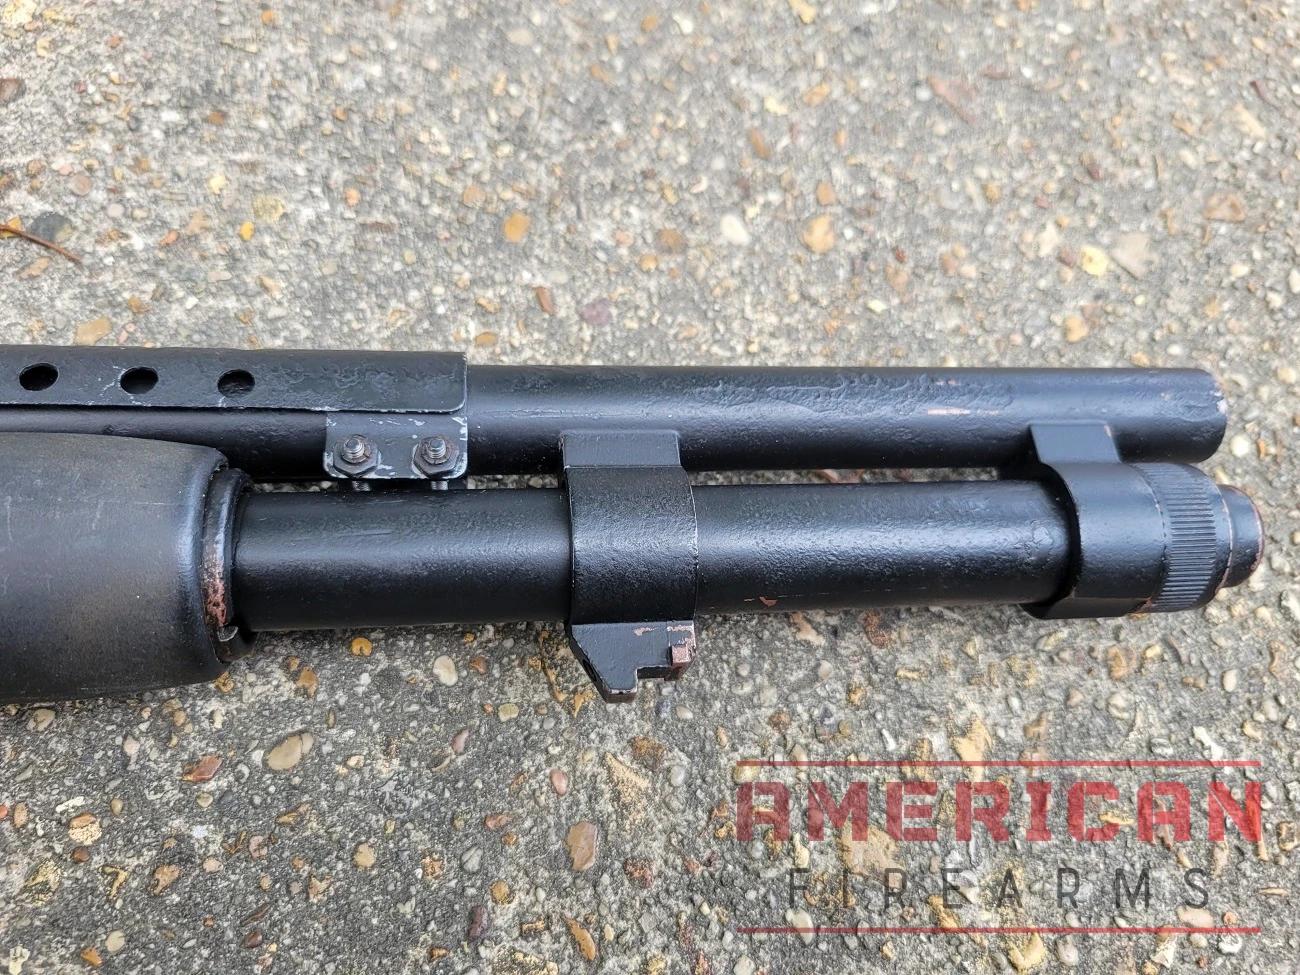 This classic M590 build includes a bayonet lug.